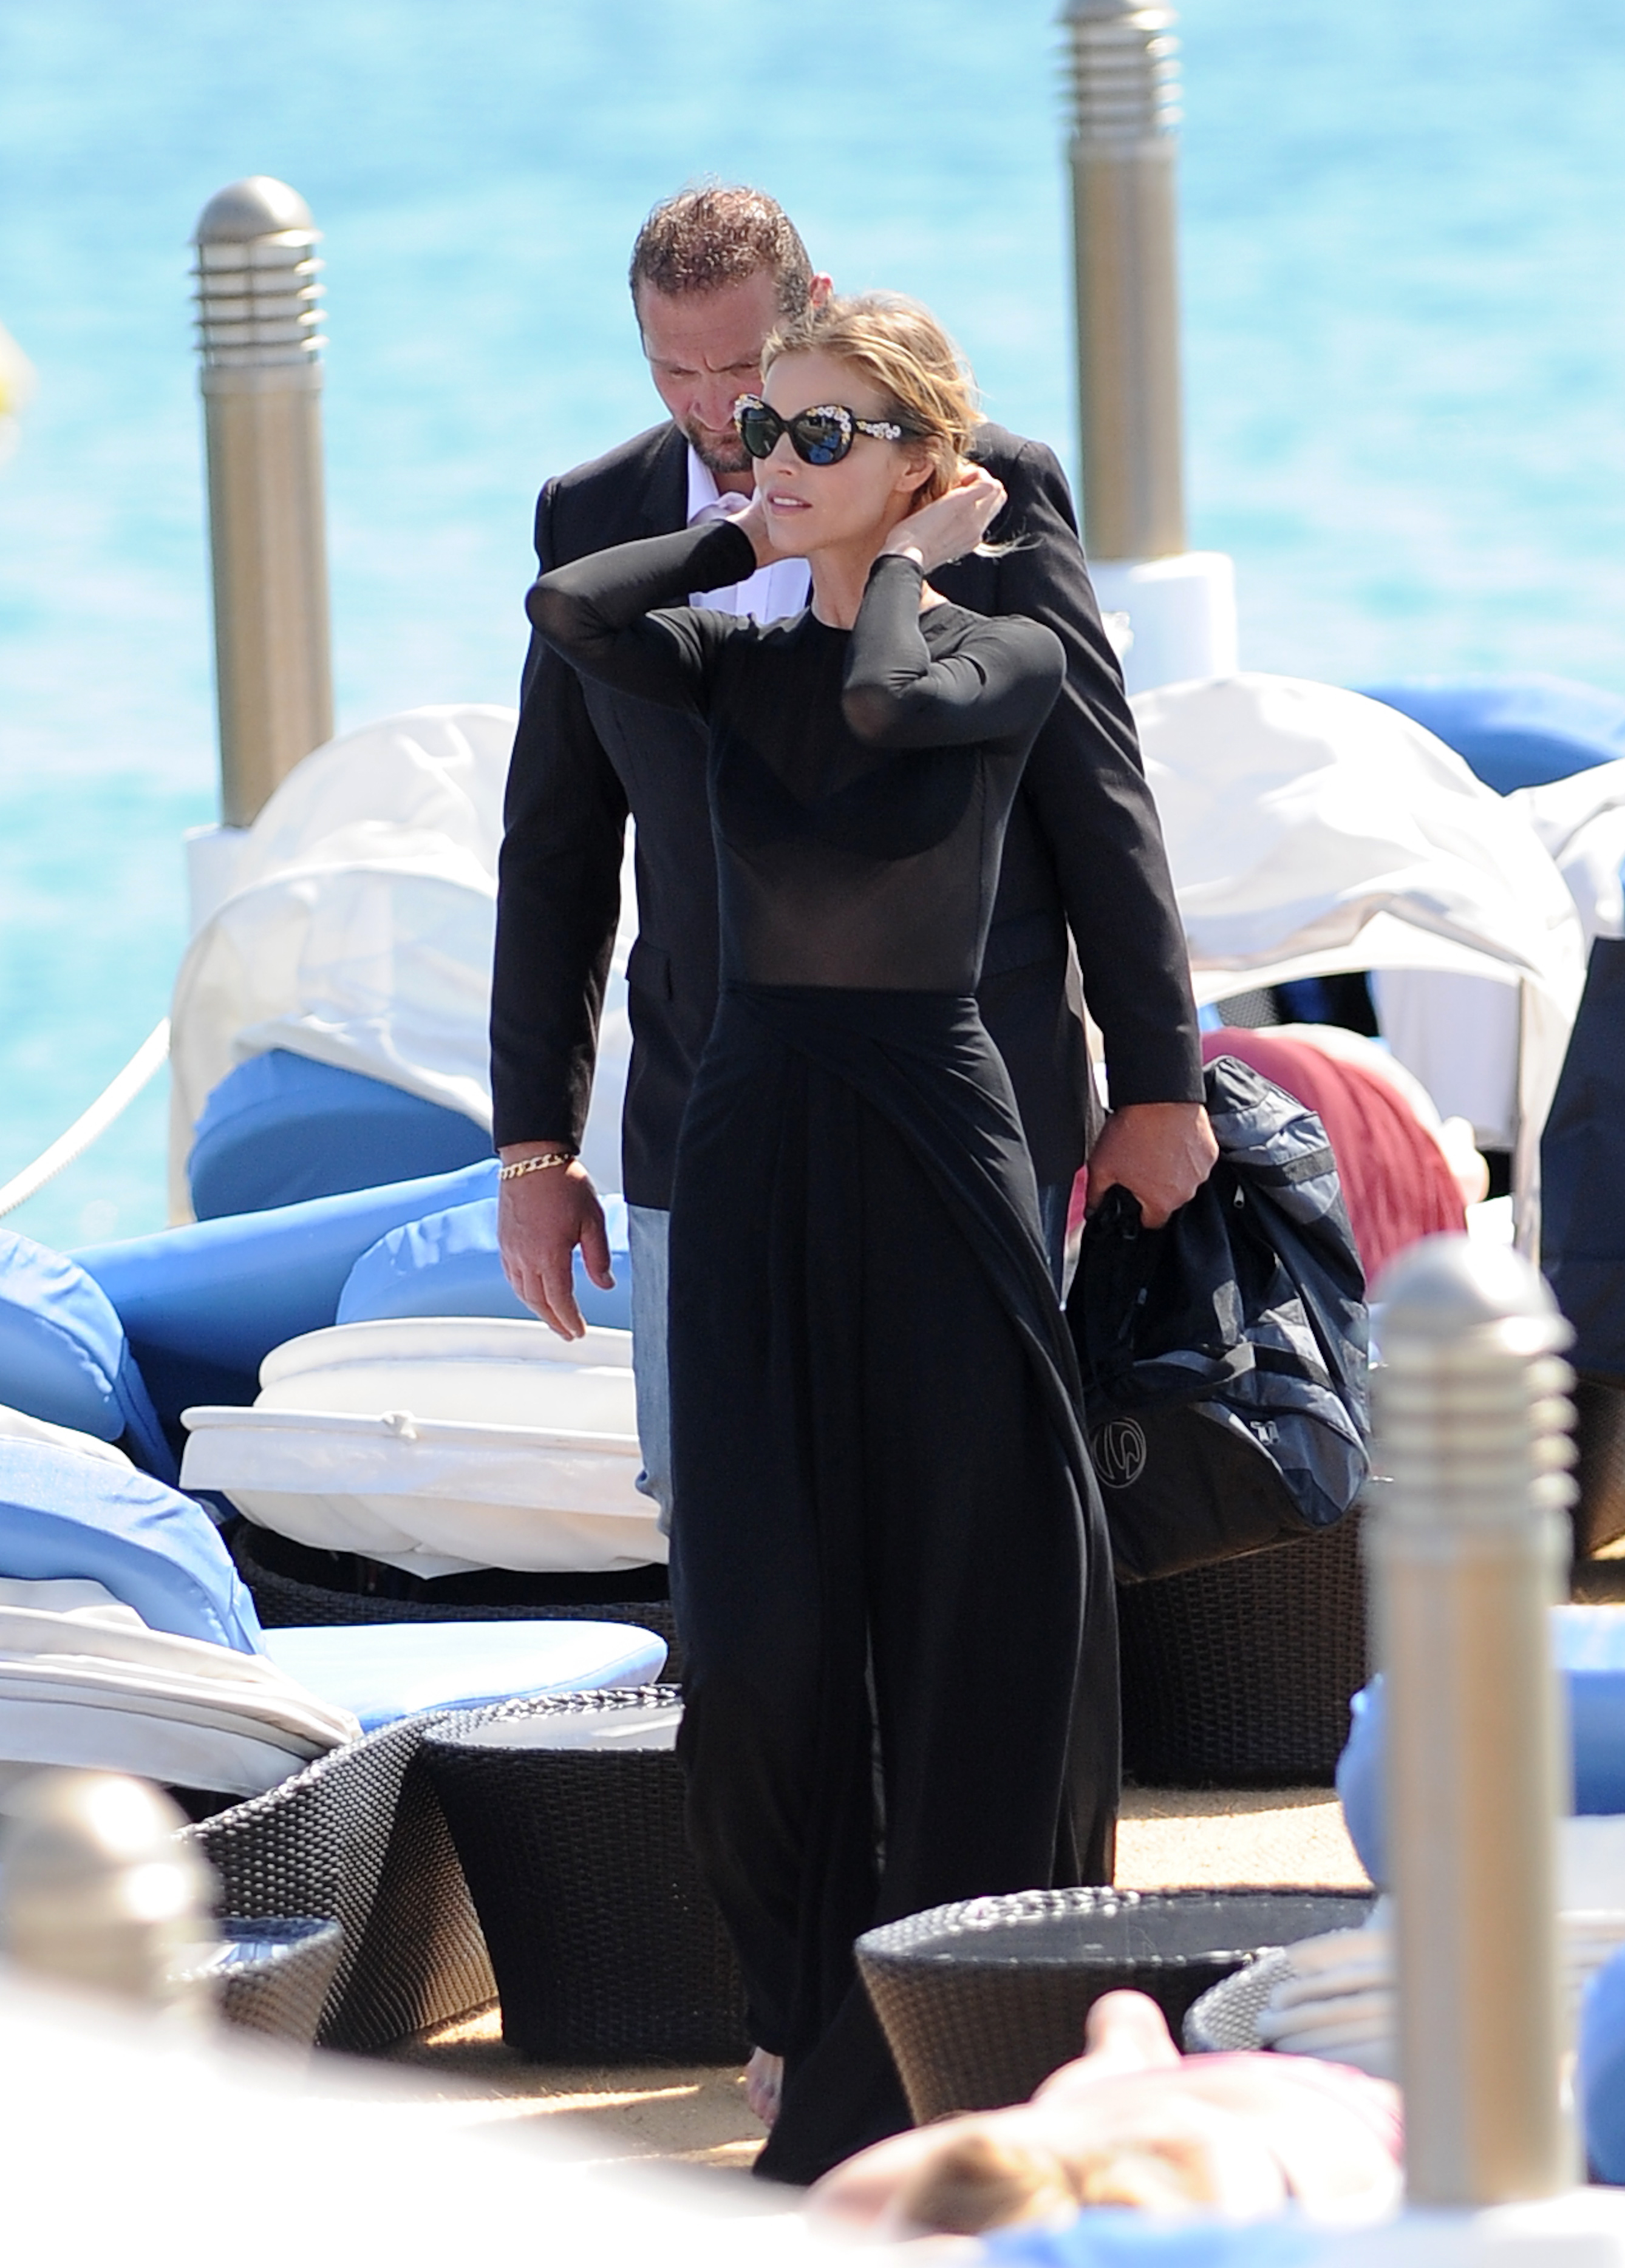 Eva Herzigova seen doing a photoshoot on a jetty in Cannes